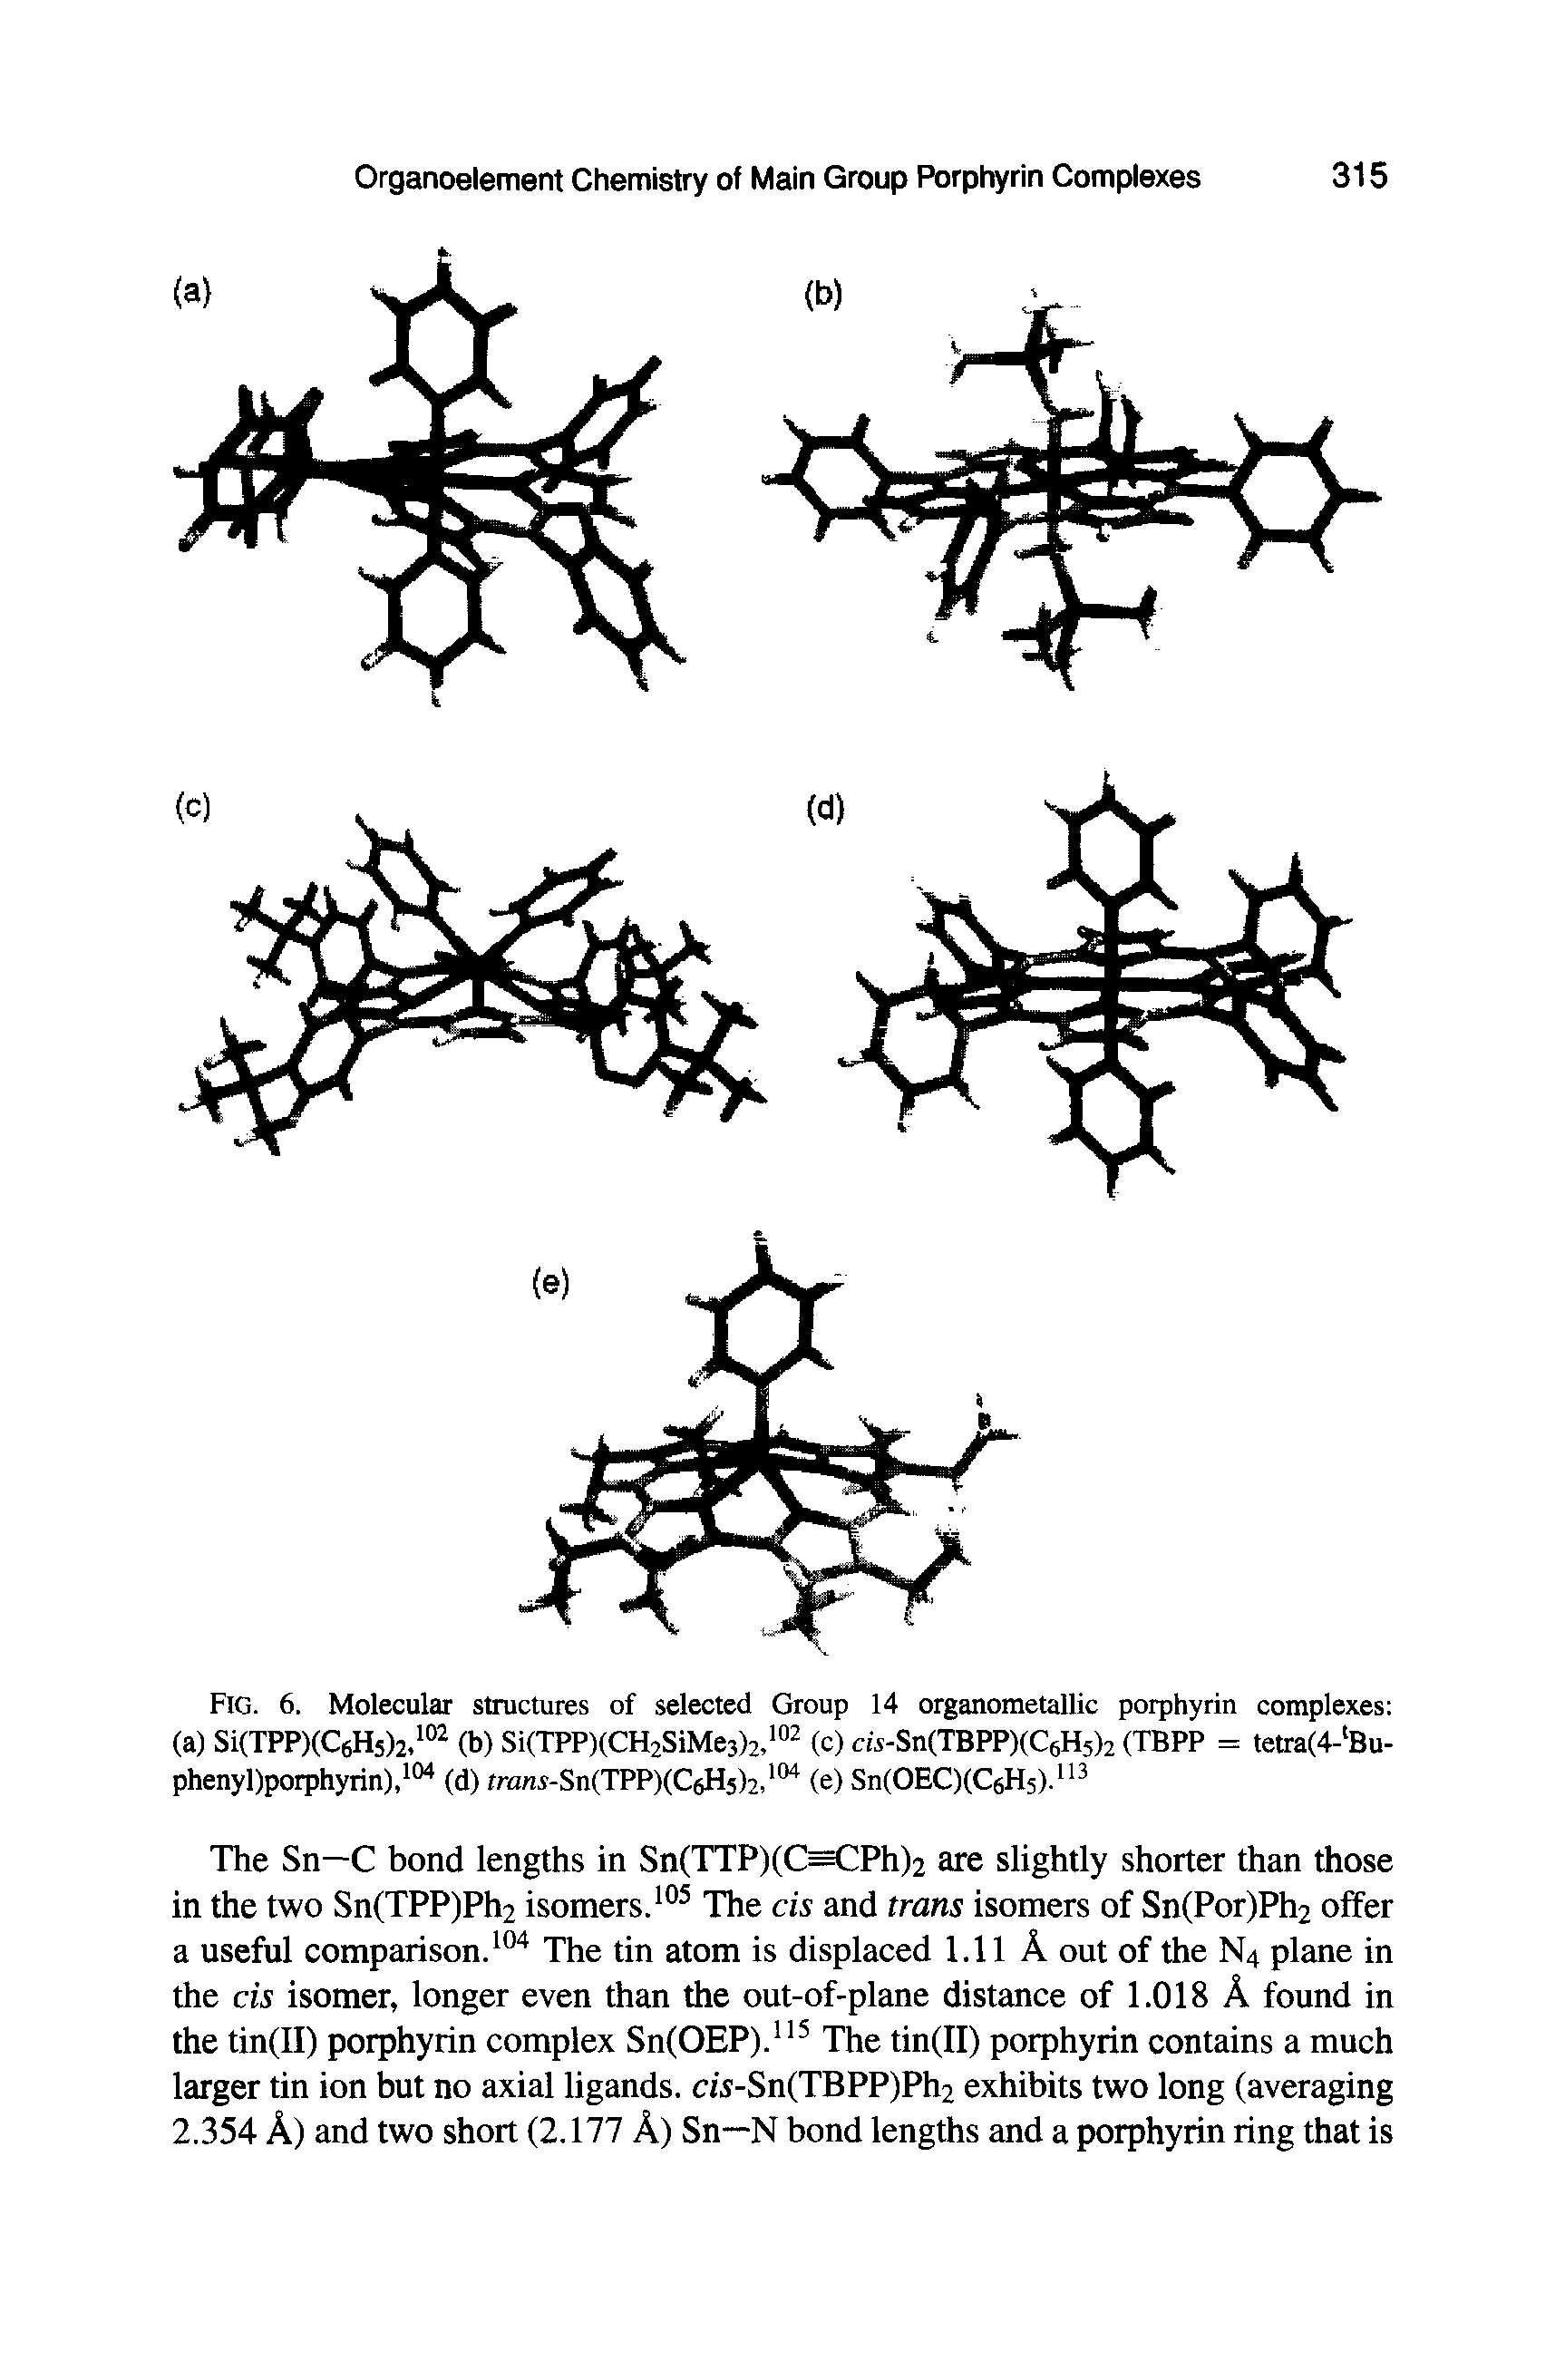 Fig. 6. Molecular structures of selected Group 14 organometallic porphyrin complexes (a) Si(TPP)(C6H5)2, (b) Si(TPP)(CH2SiMe3)2, (c) cis-SnCTBPPKCeHjlz (TBPP = tetra(4- Bu-phenyl)porphyrin), (d) rranr-Sn(TPP)(C6H5)2, (e) Sn(OEC)(C6H5)." ...